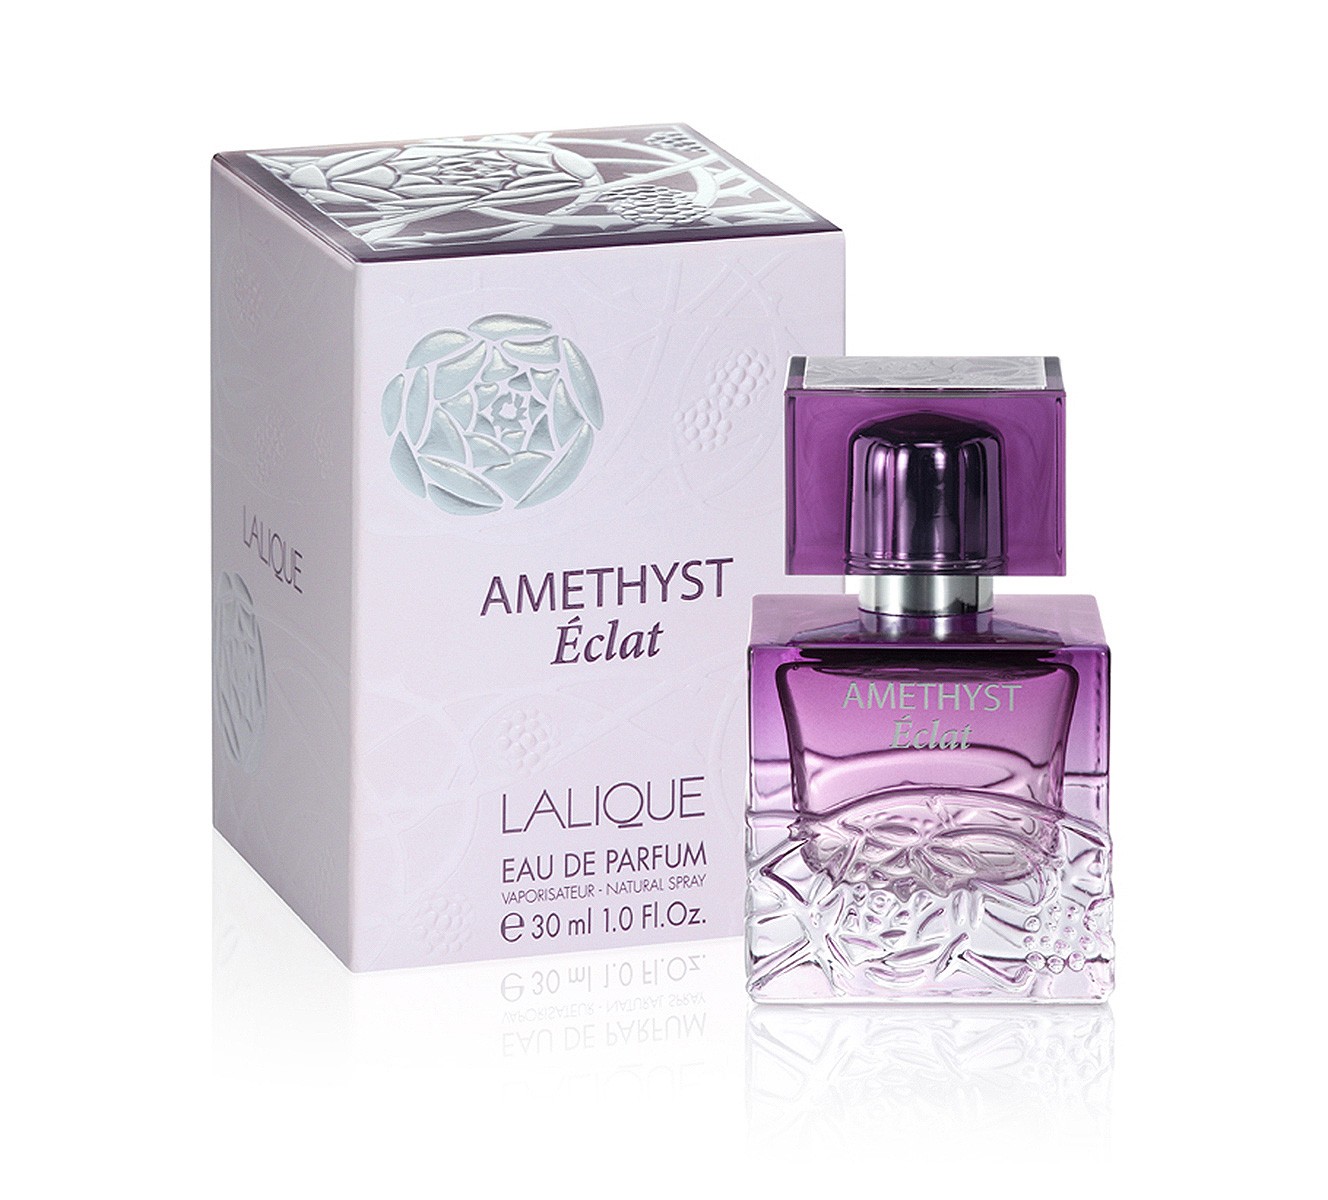 Amethyst Eclat Lalique Perfume A Fragrance For Women 2014